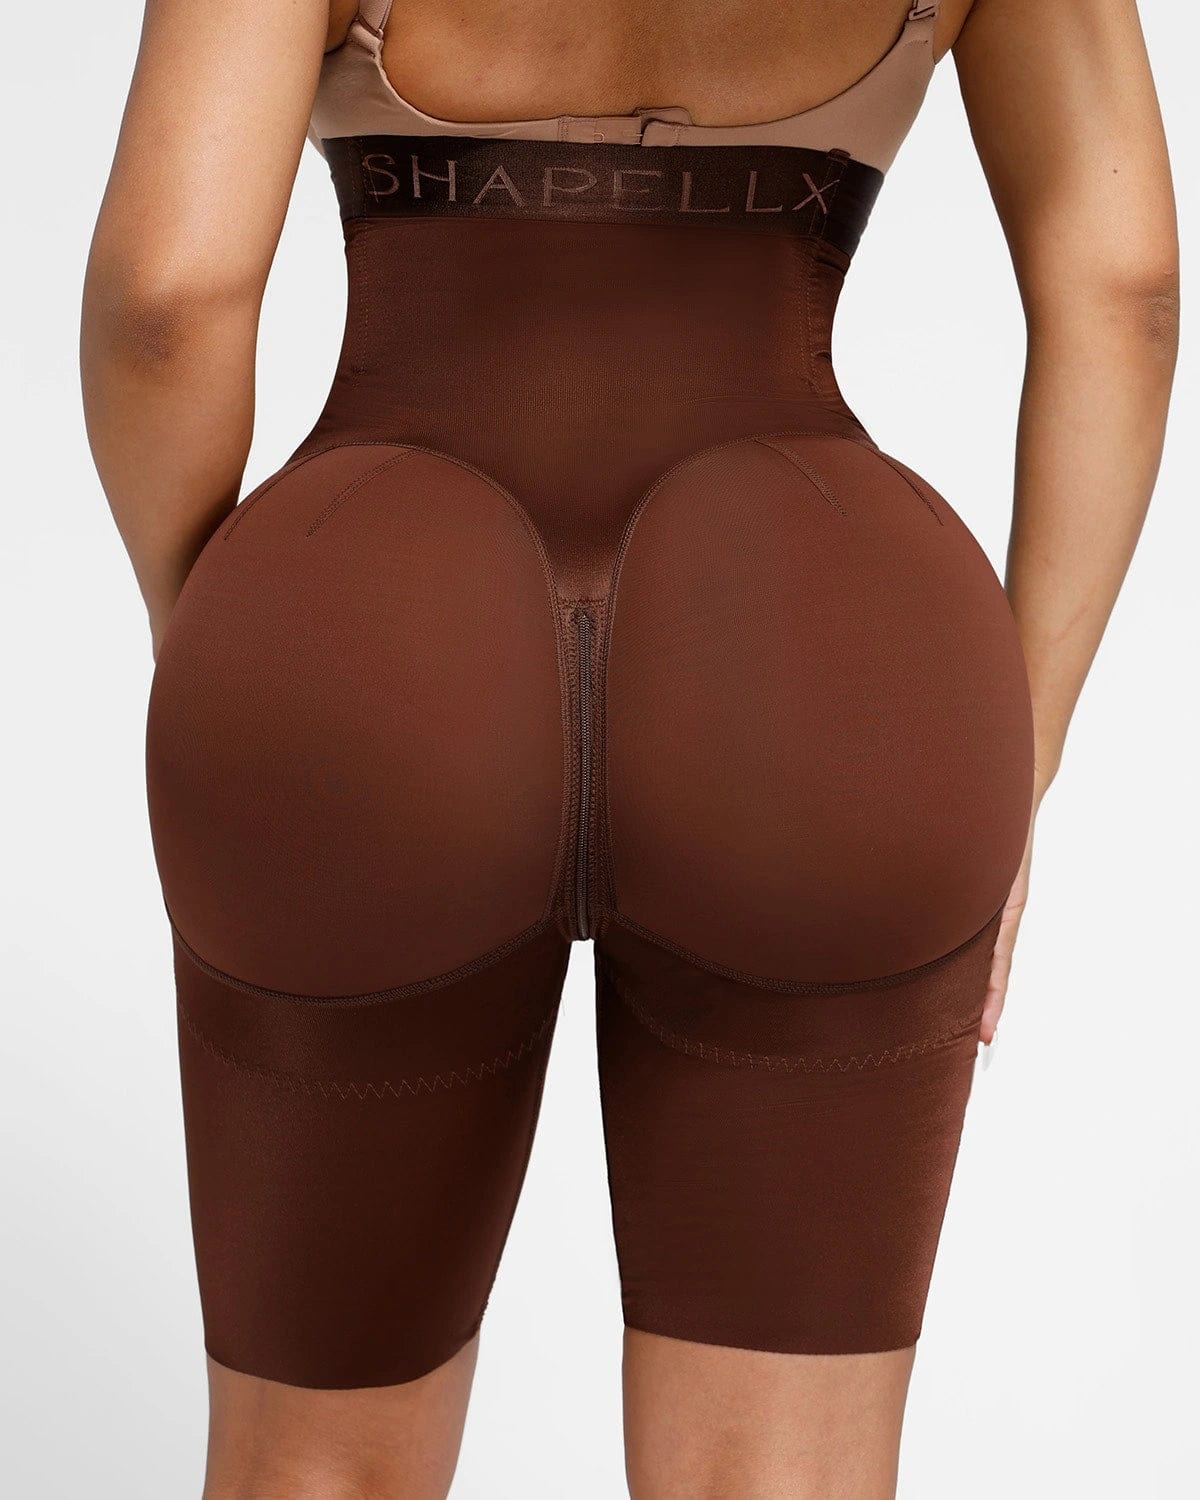 AirSlim® Shaping Butt Lifter Logo Shorts